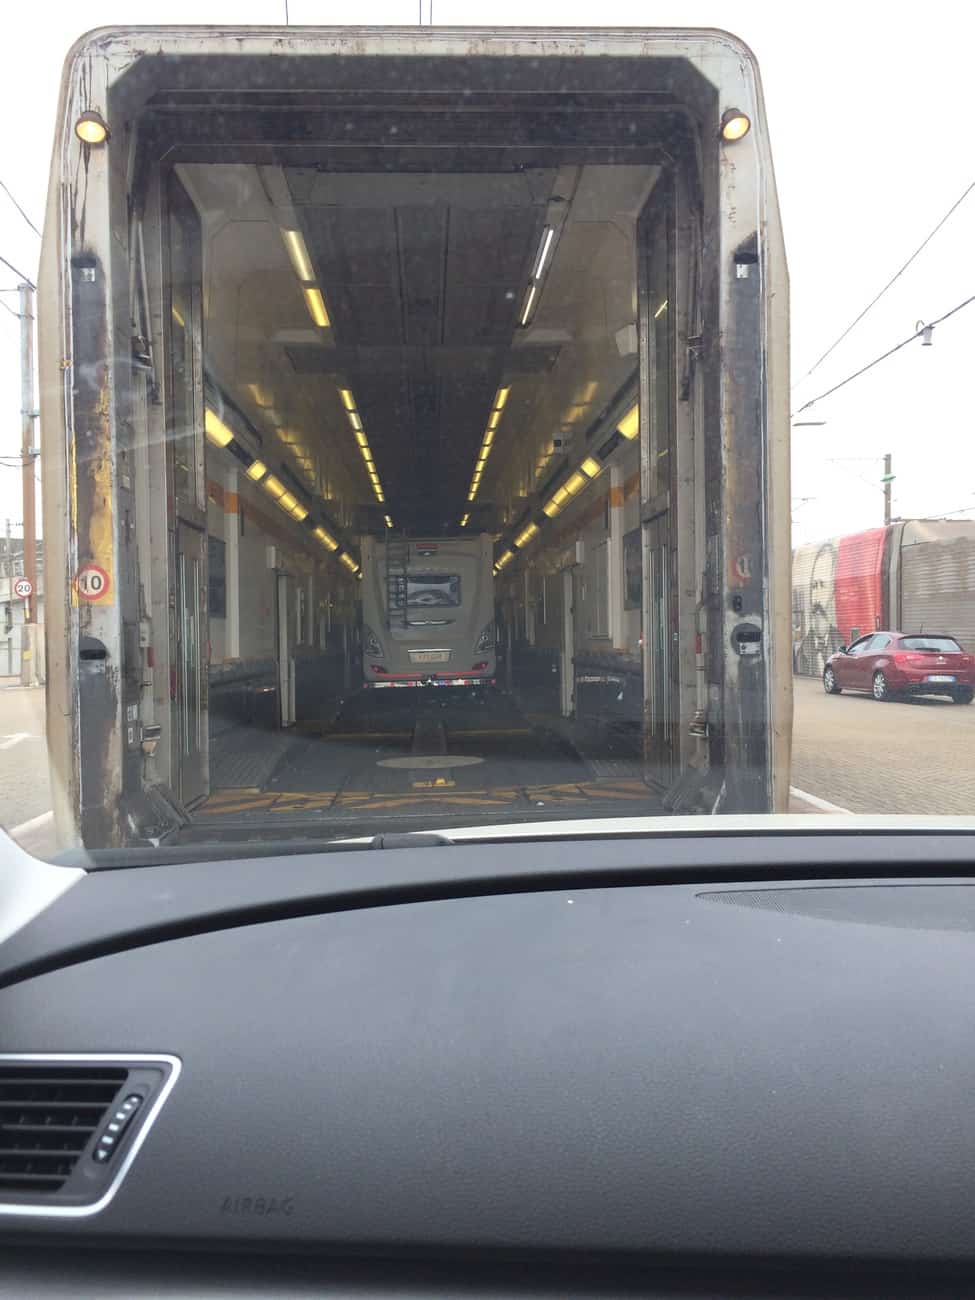 Eurotunnel - entering the train